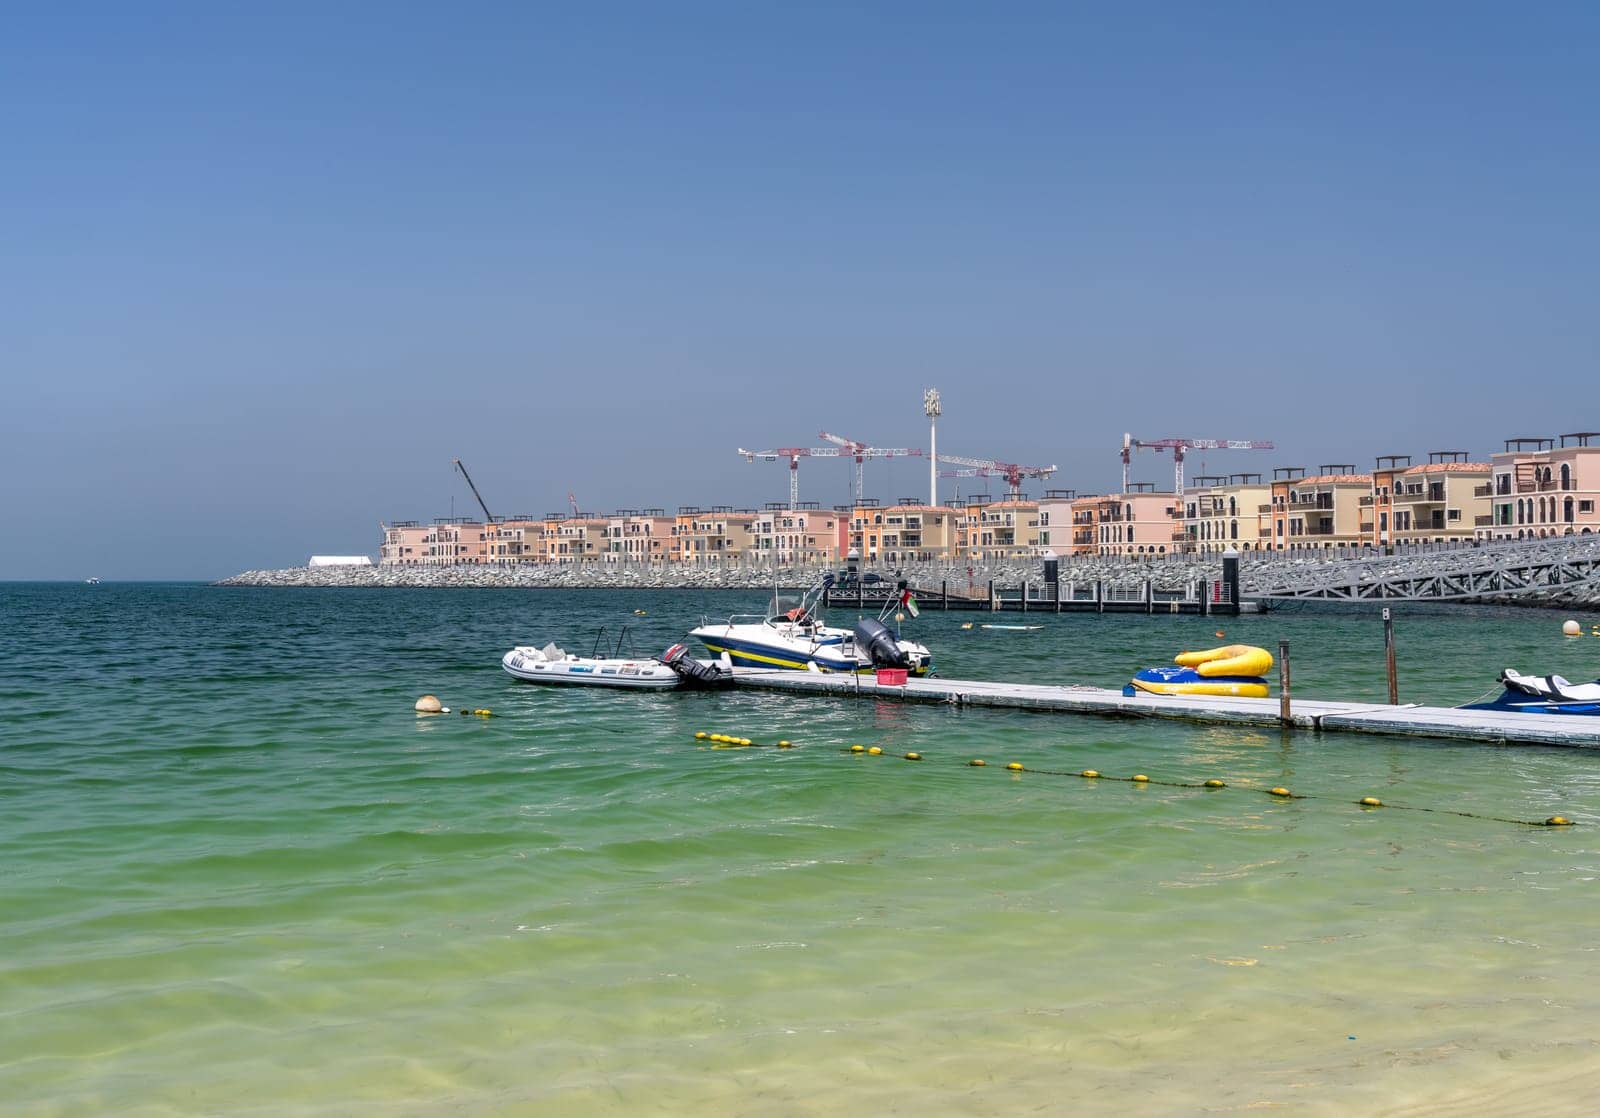 New apartments under construction in La Mer by the Gulf coast of Dubai UAE